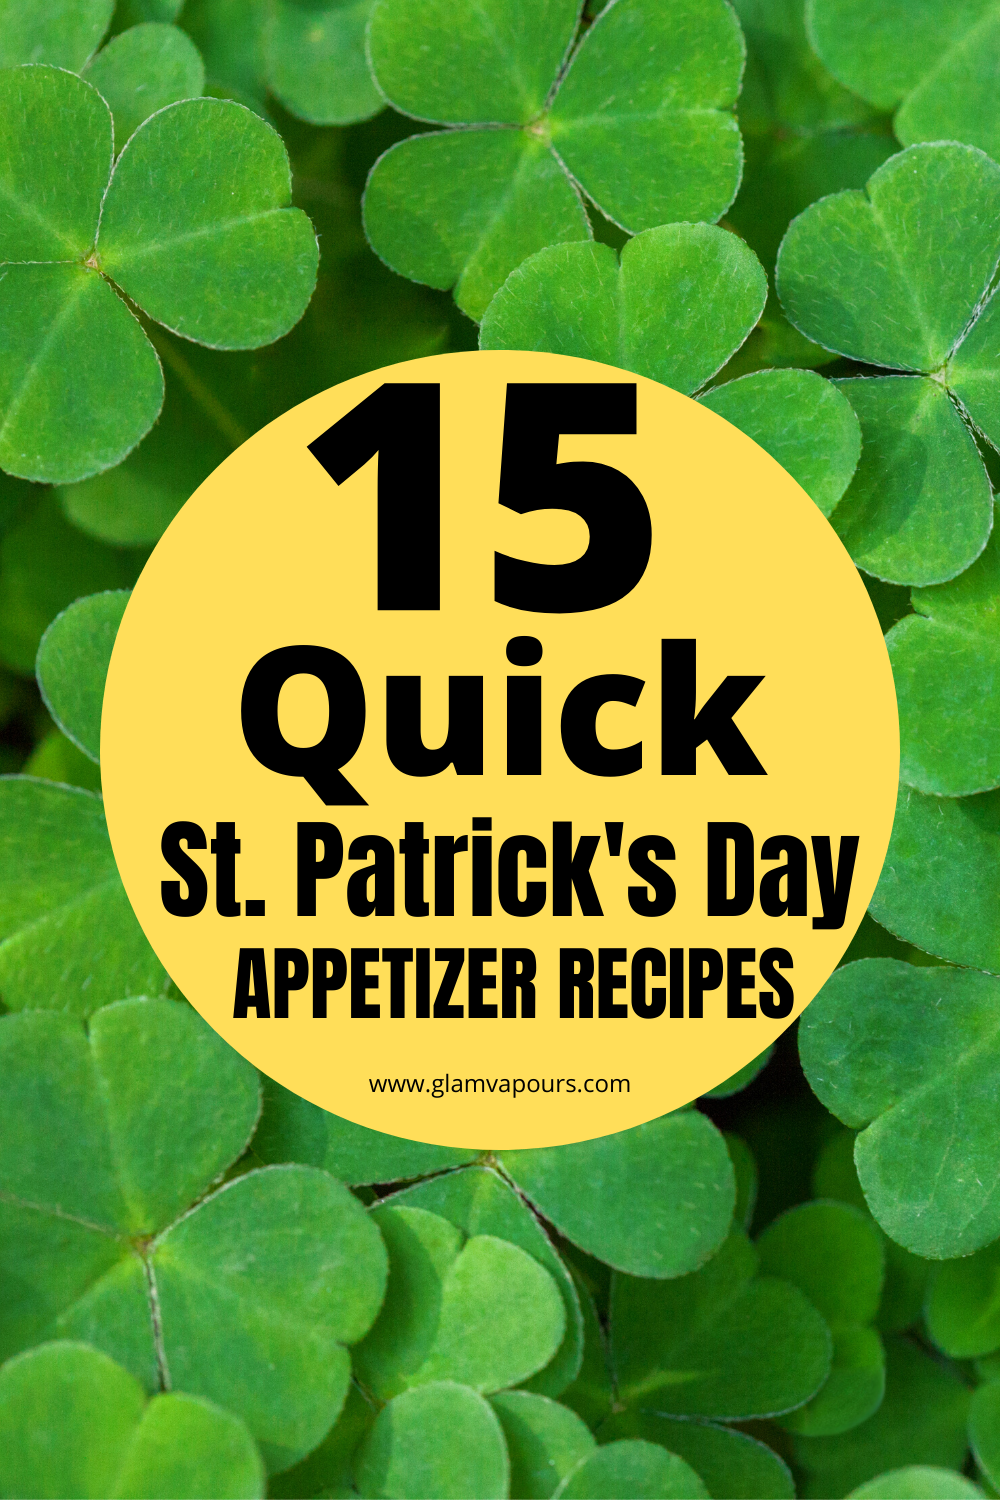 St. Patrick's day Appetizer Recipes